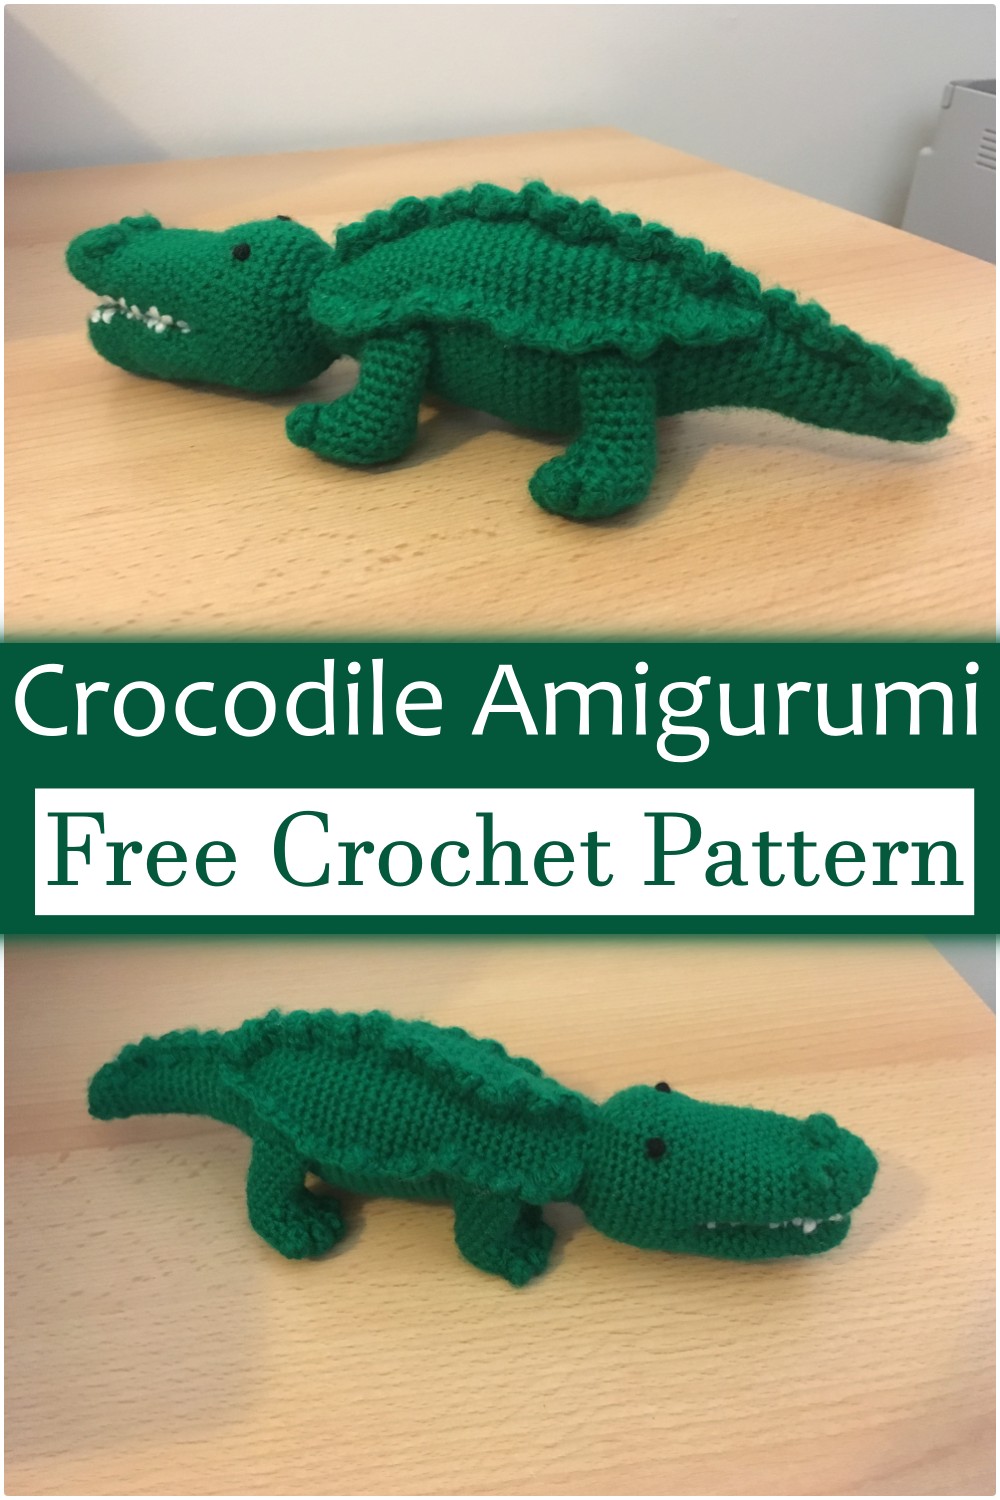 Crochet Crocodile Amigurumi Free Pattern